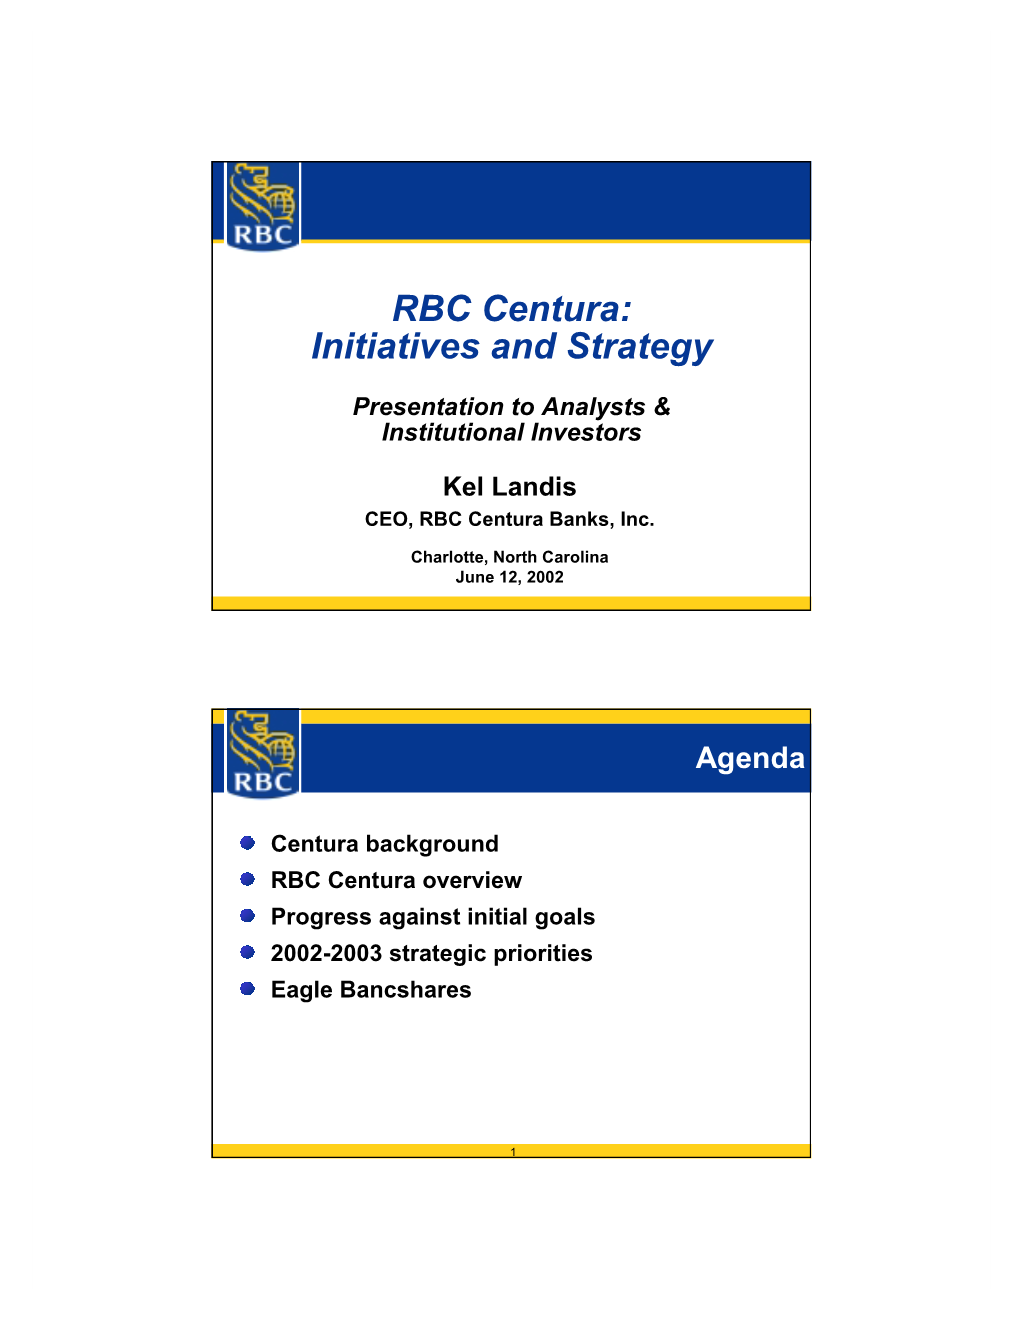 RBC Centura: Initiatives and Strategy